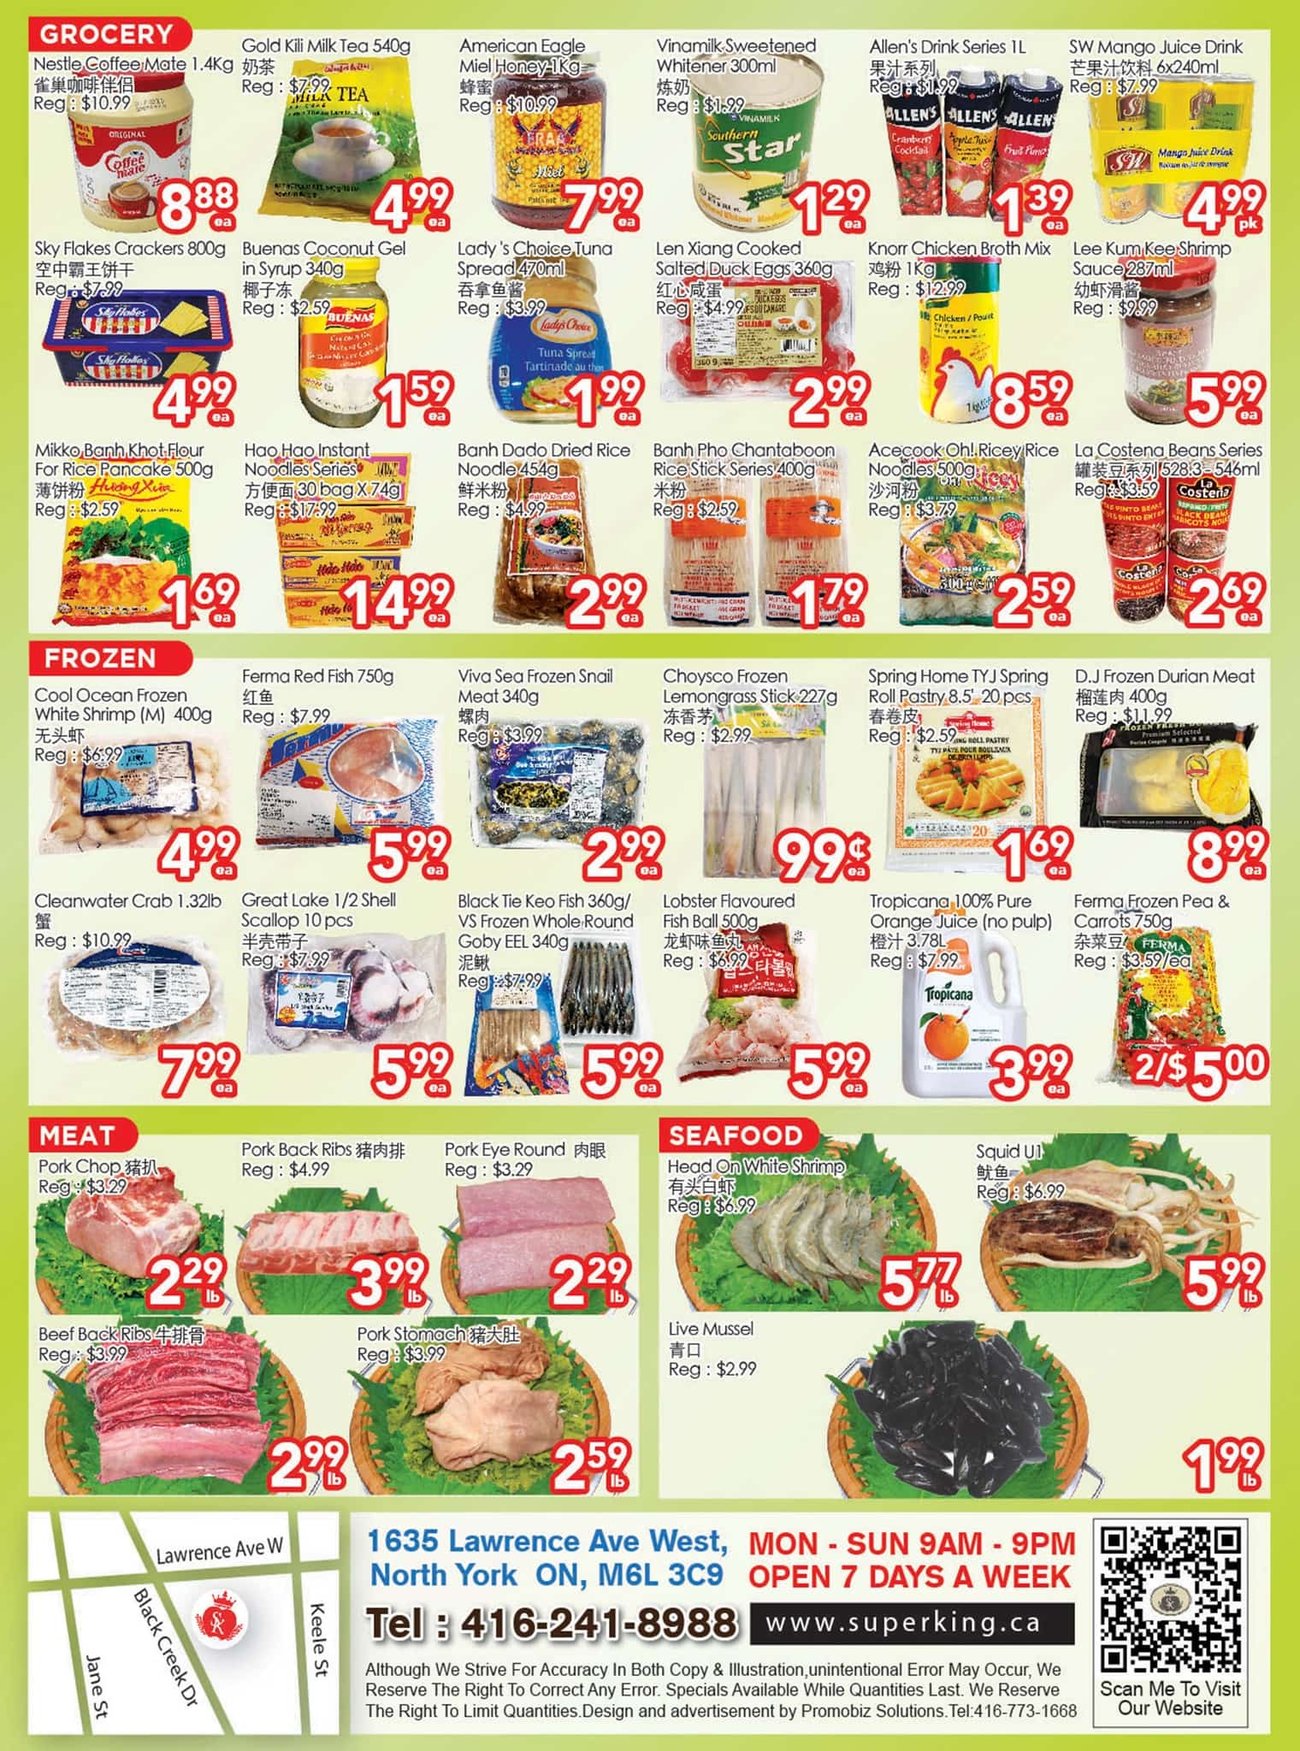 Superking Supermarket - North York - Weekly Flyer Specials - Page 2